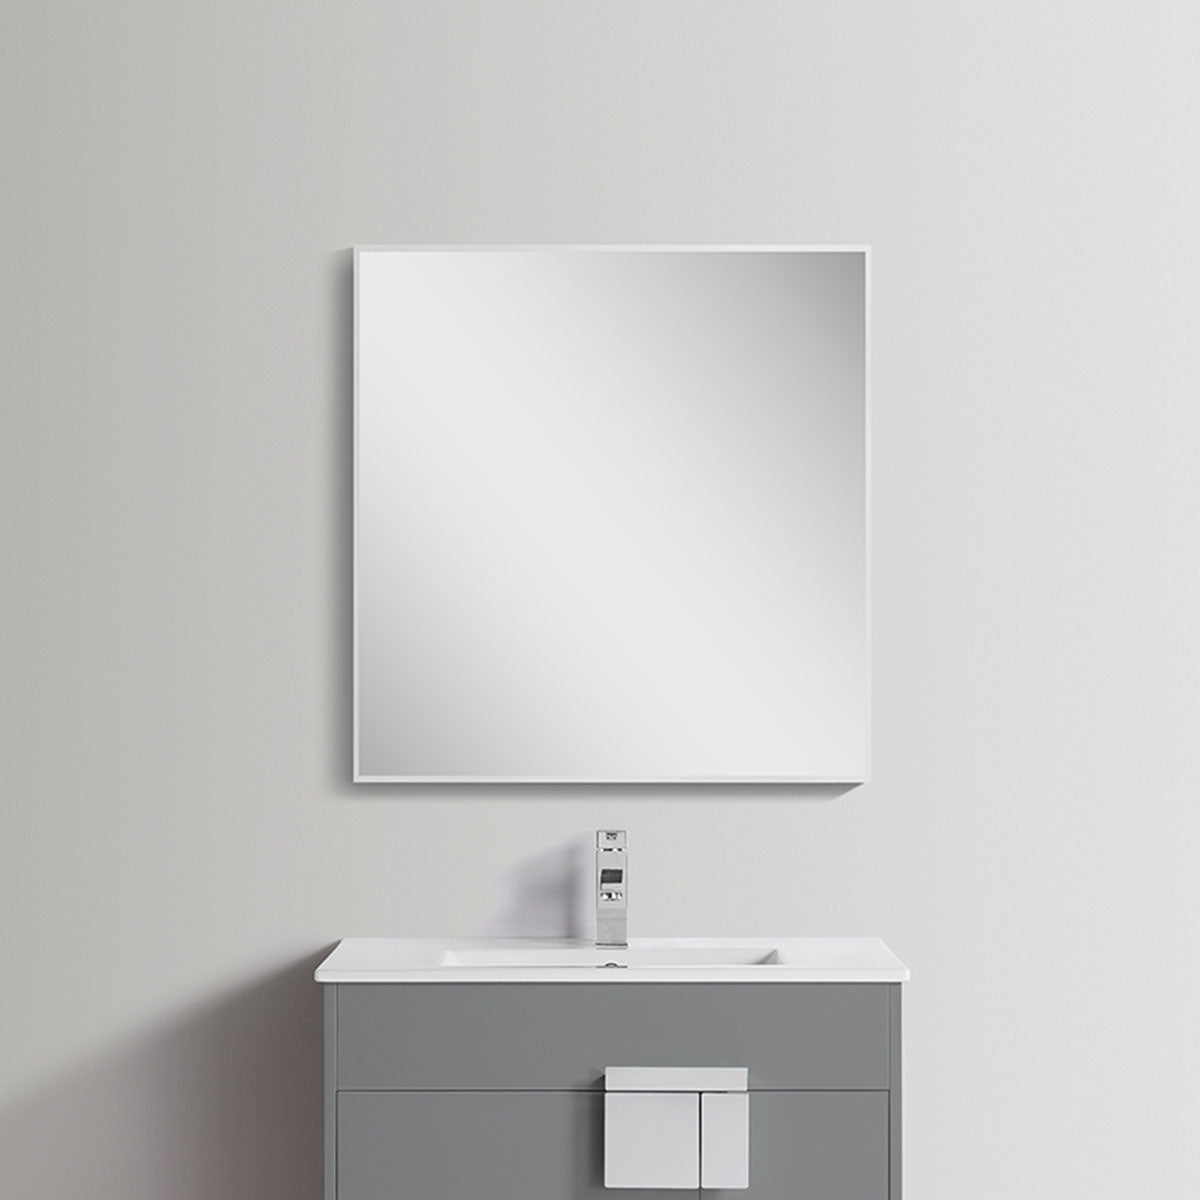 30"w x 32"h Aluminum Rectangle Bathroom Wall Mirror (Silver) - iStyle Bath